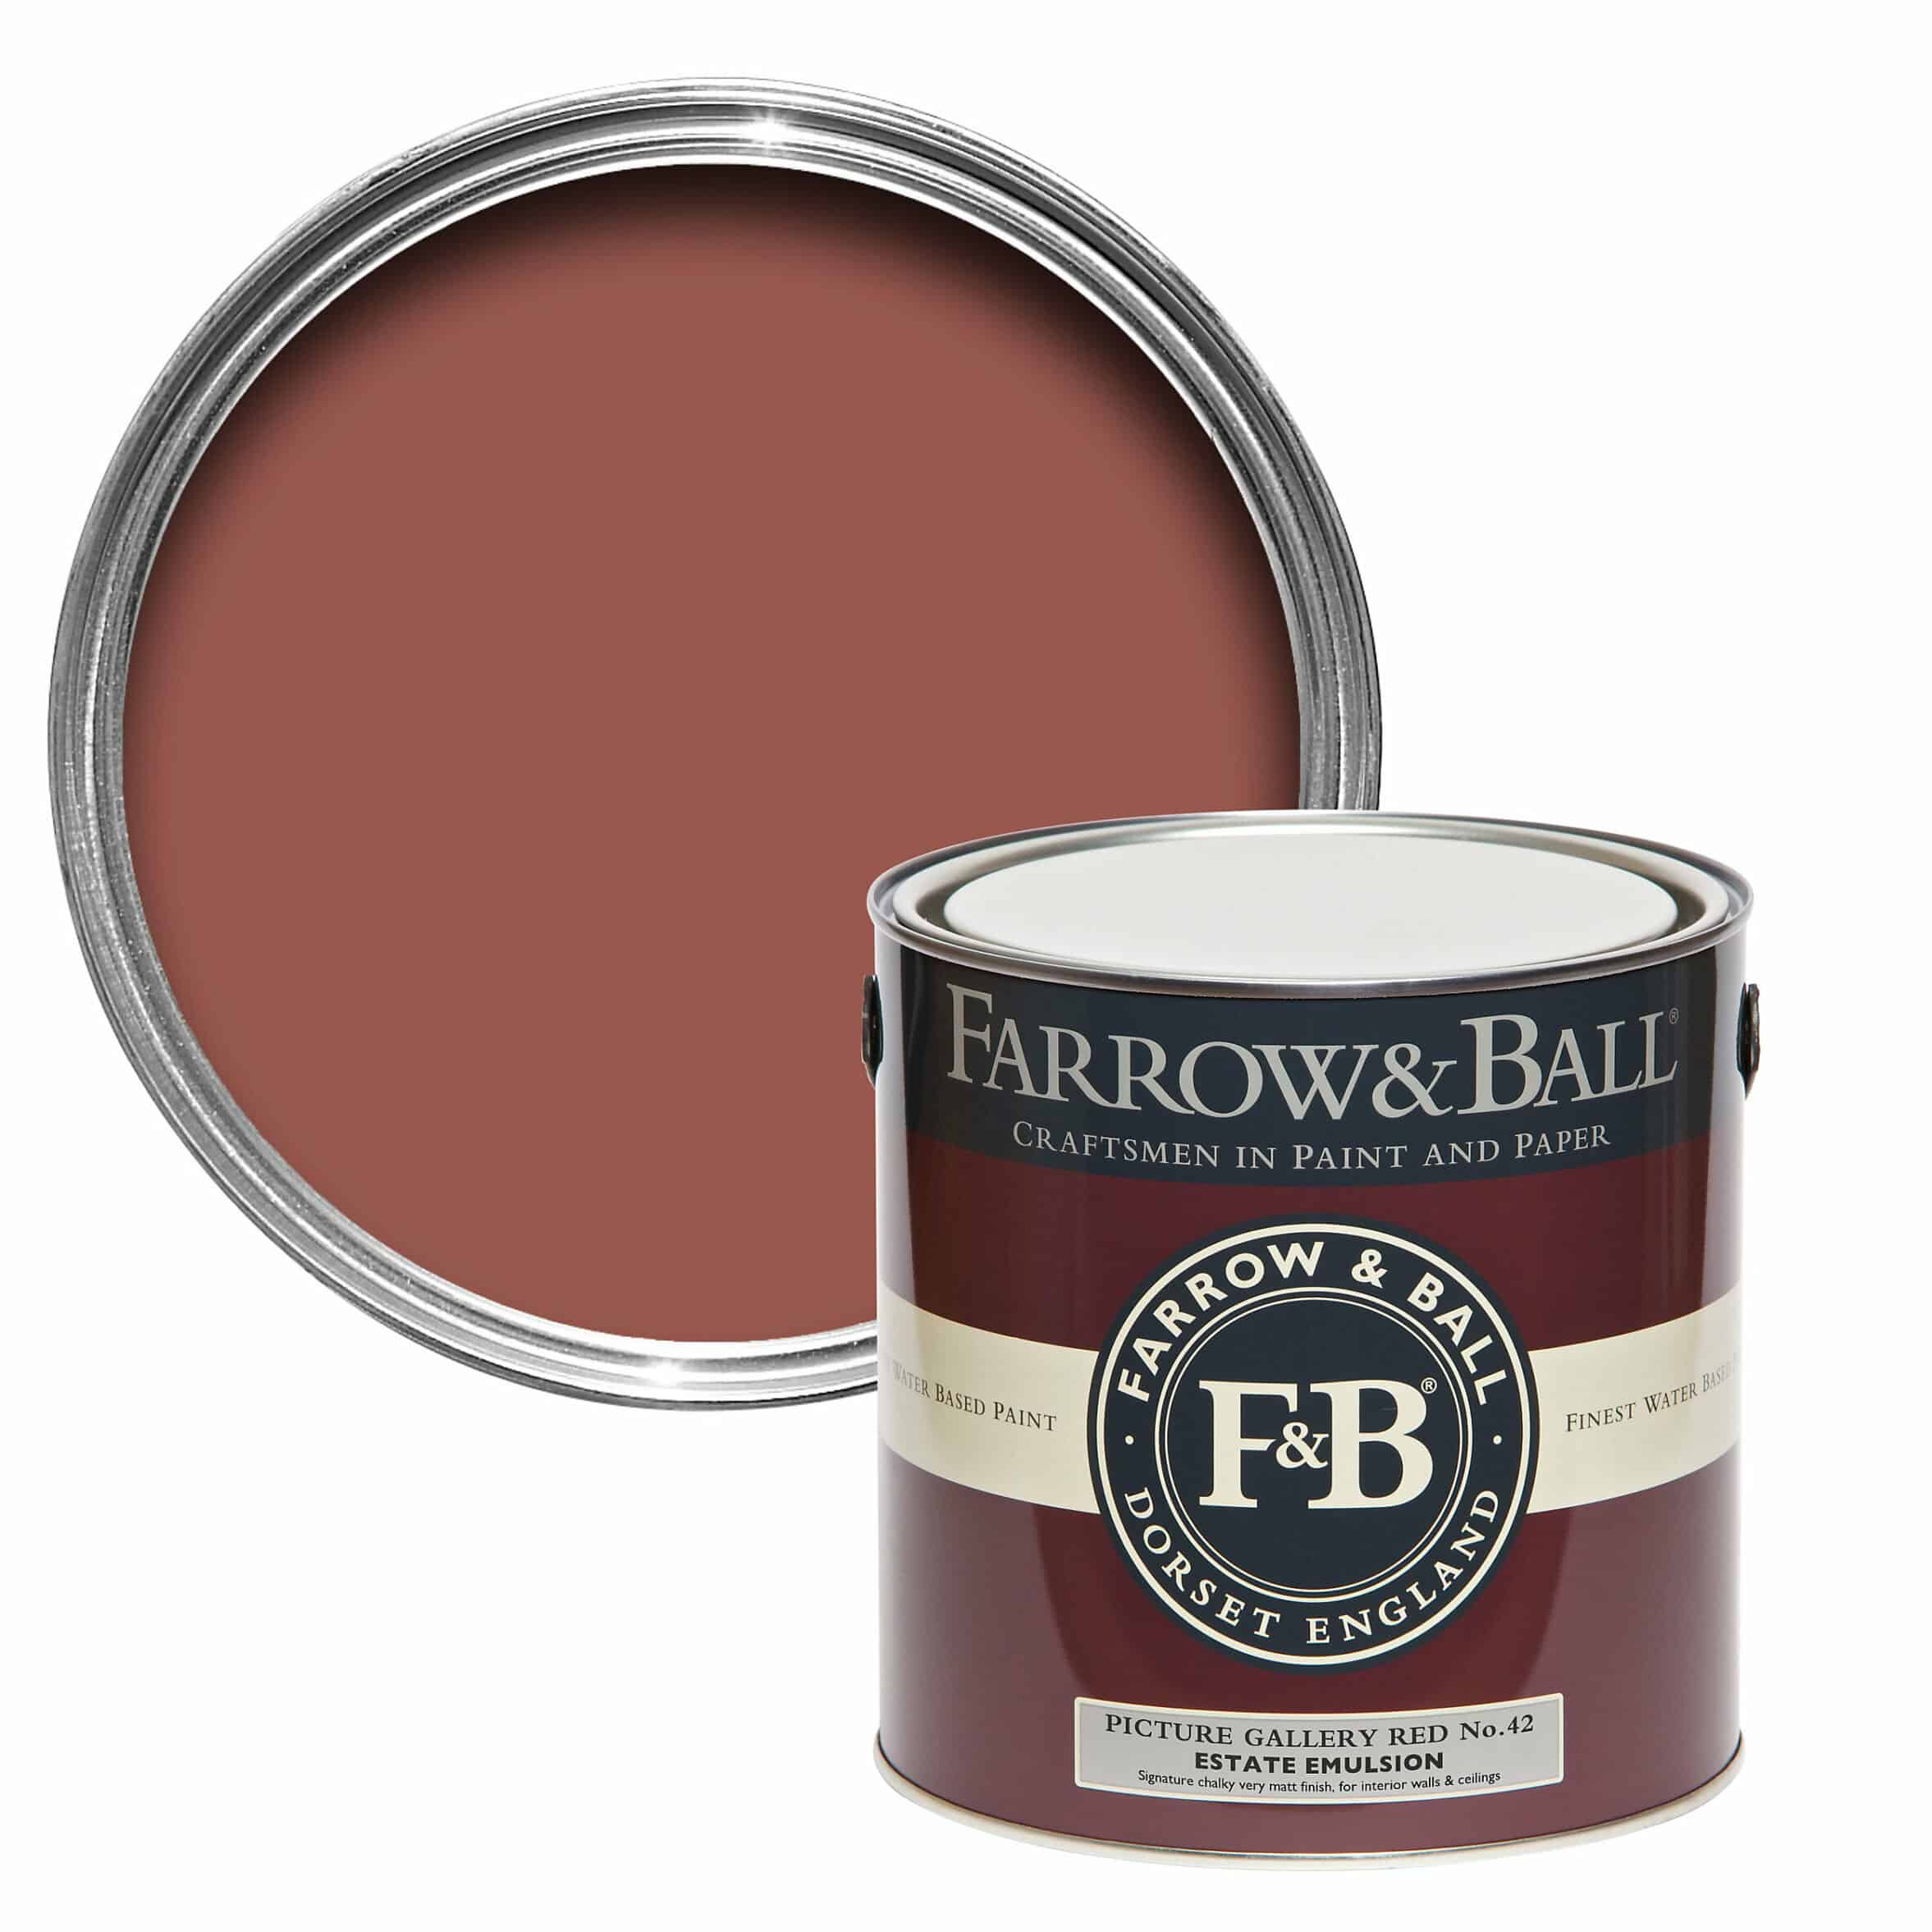 Farrow & Ball Estate Picture gallery red No.42 Matt Emulsion paint, 2.5L-4227